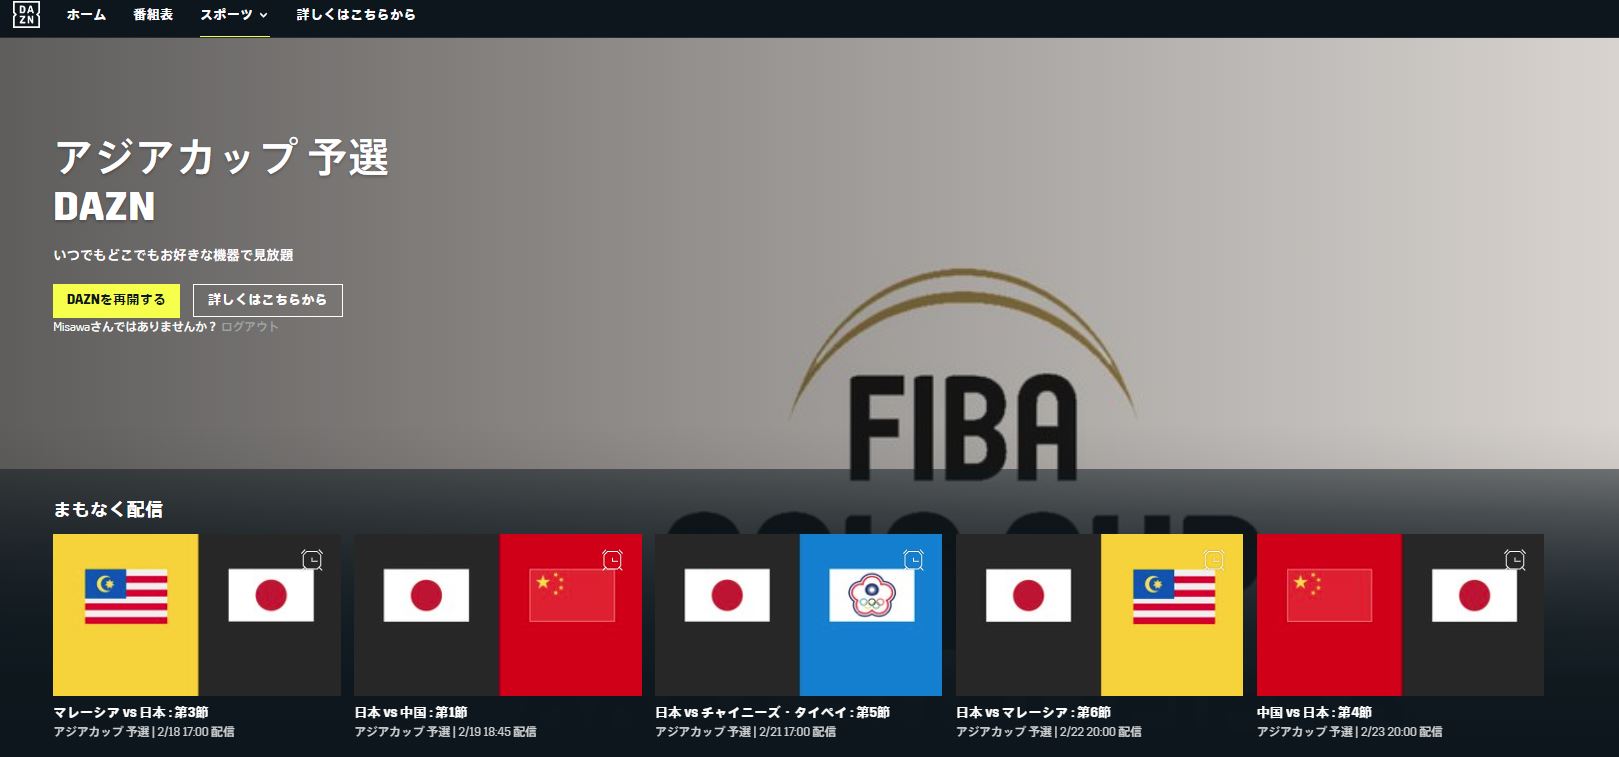 Fibaアジアカップ21予選 バスケ日本代表ライブ中継一覧 見逃し動画配信は無料 バスケミル